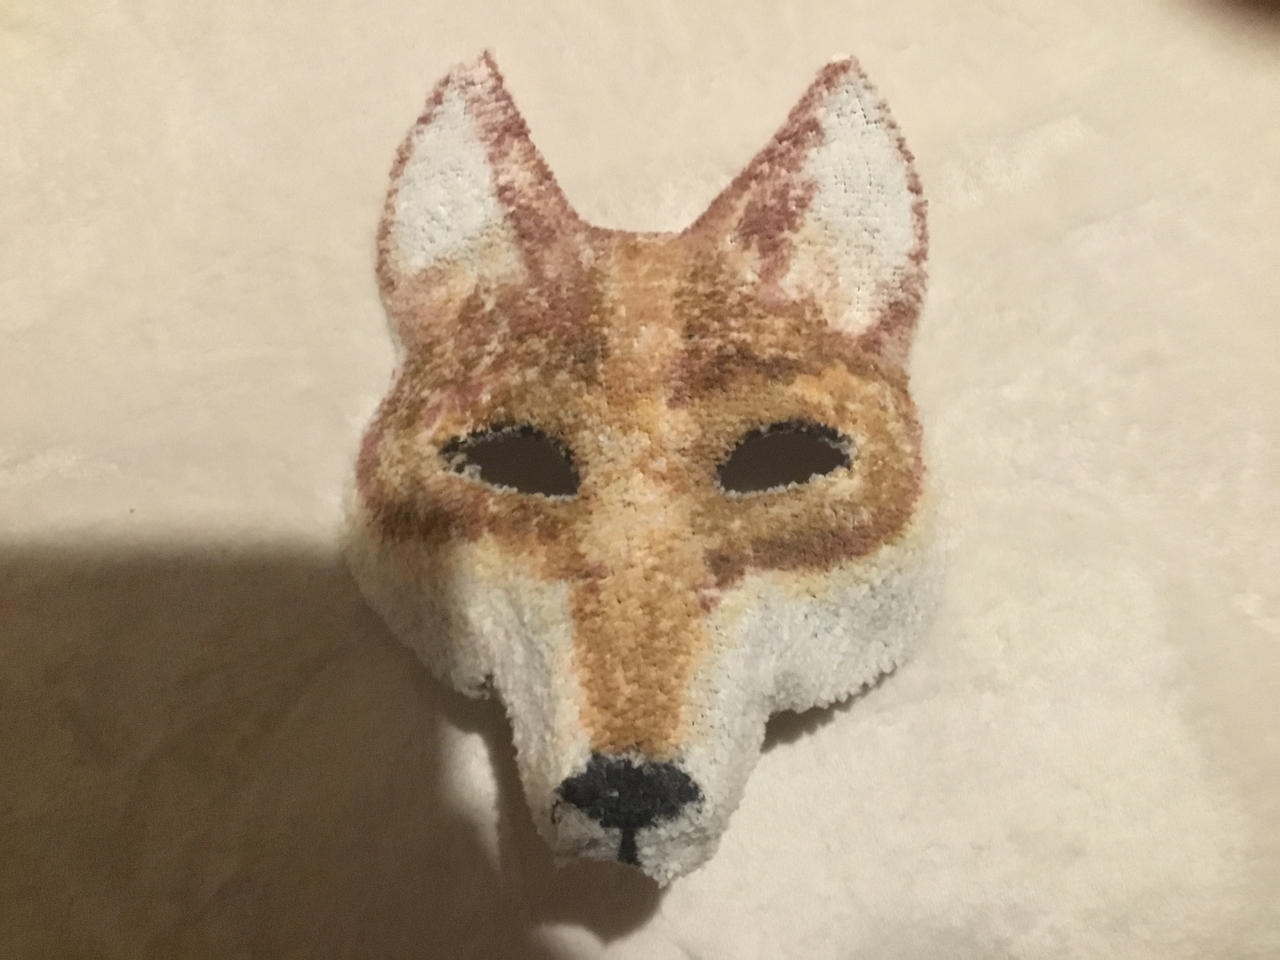 Fox therian mask design by FrolickingFinn on DeviantArt